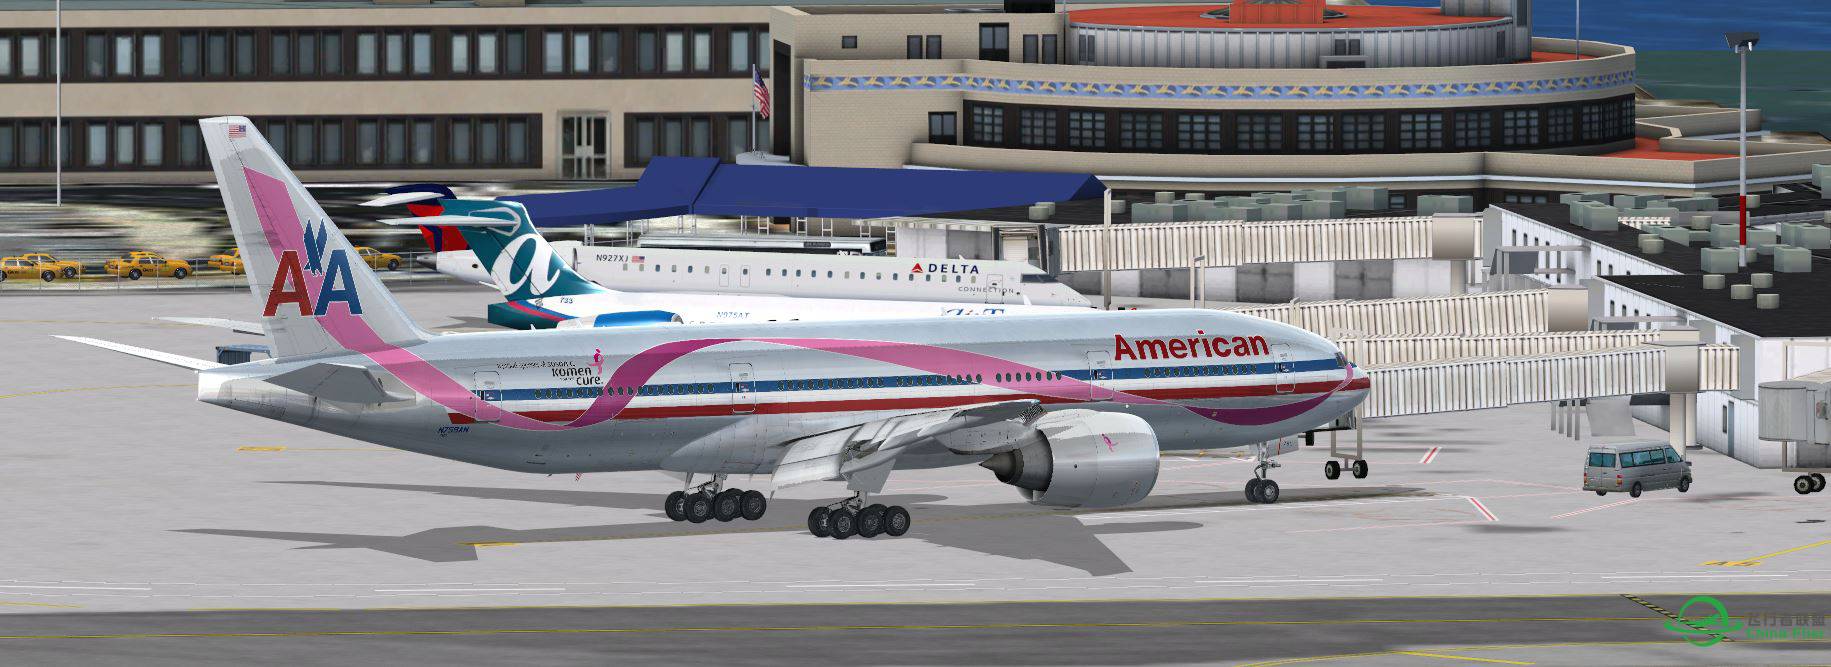 B777 American Airline-1404 